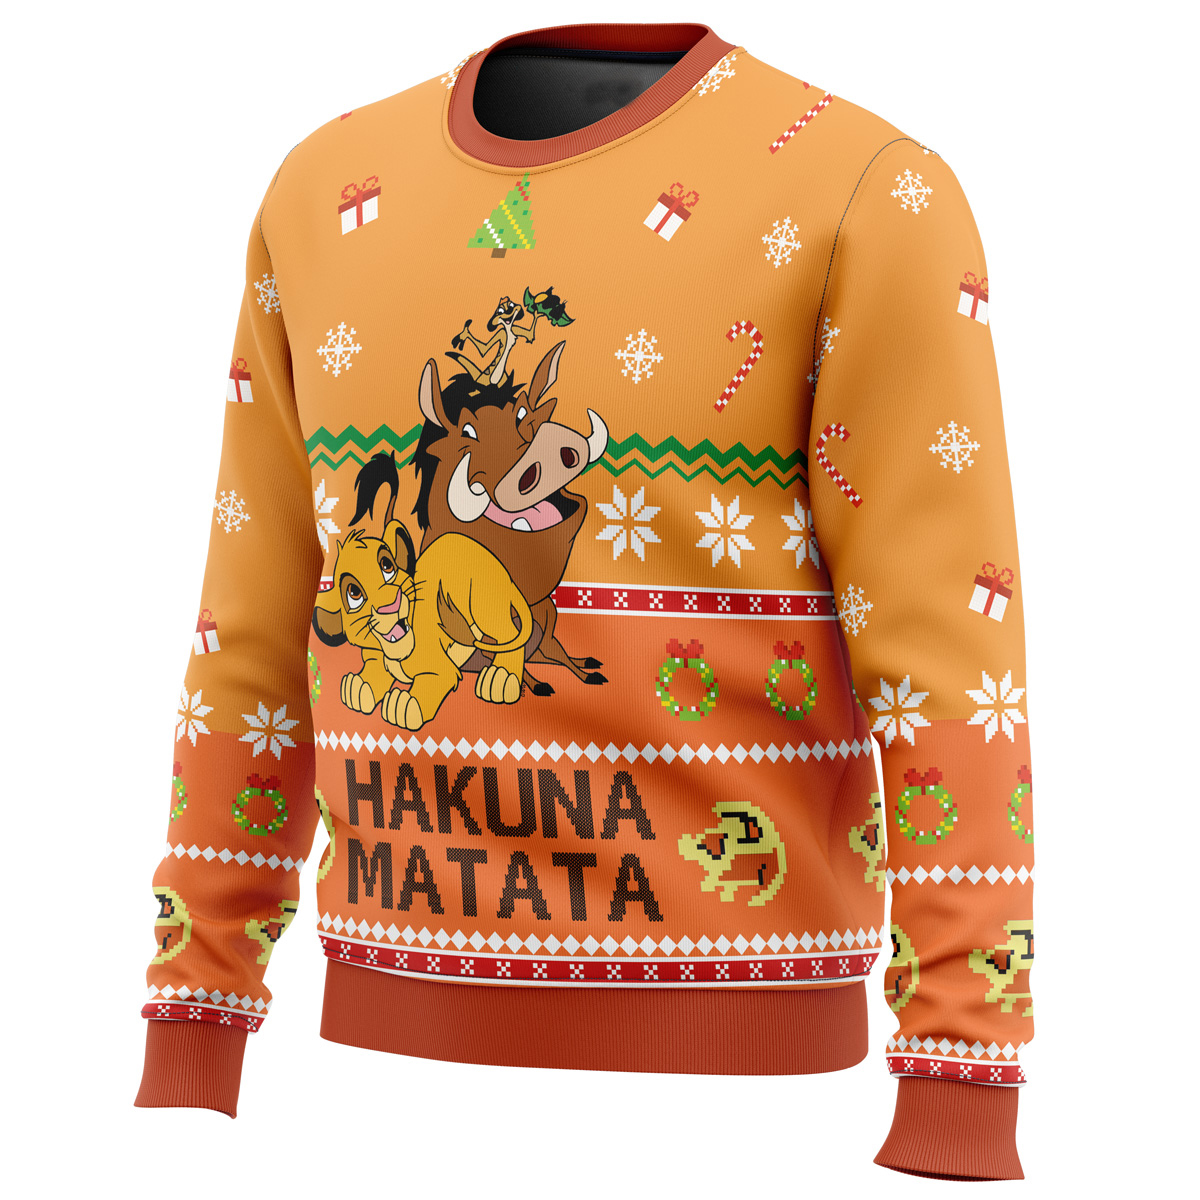 Hakuna Matata Ugly Christmas Sweater 1